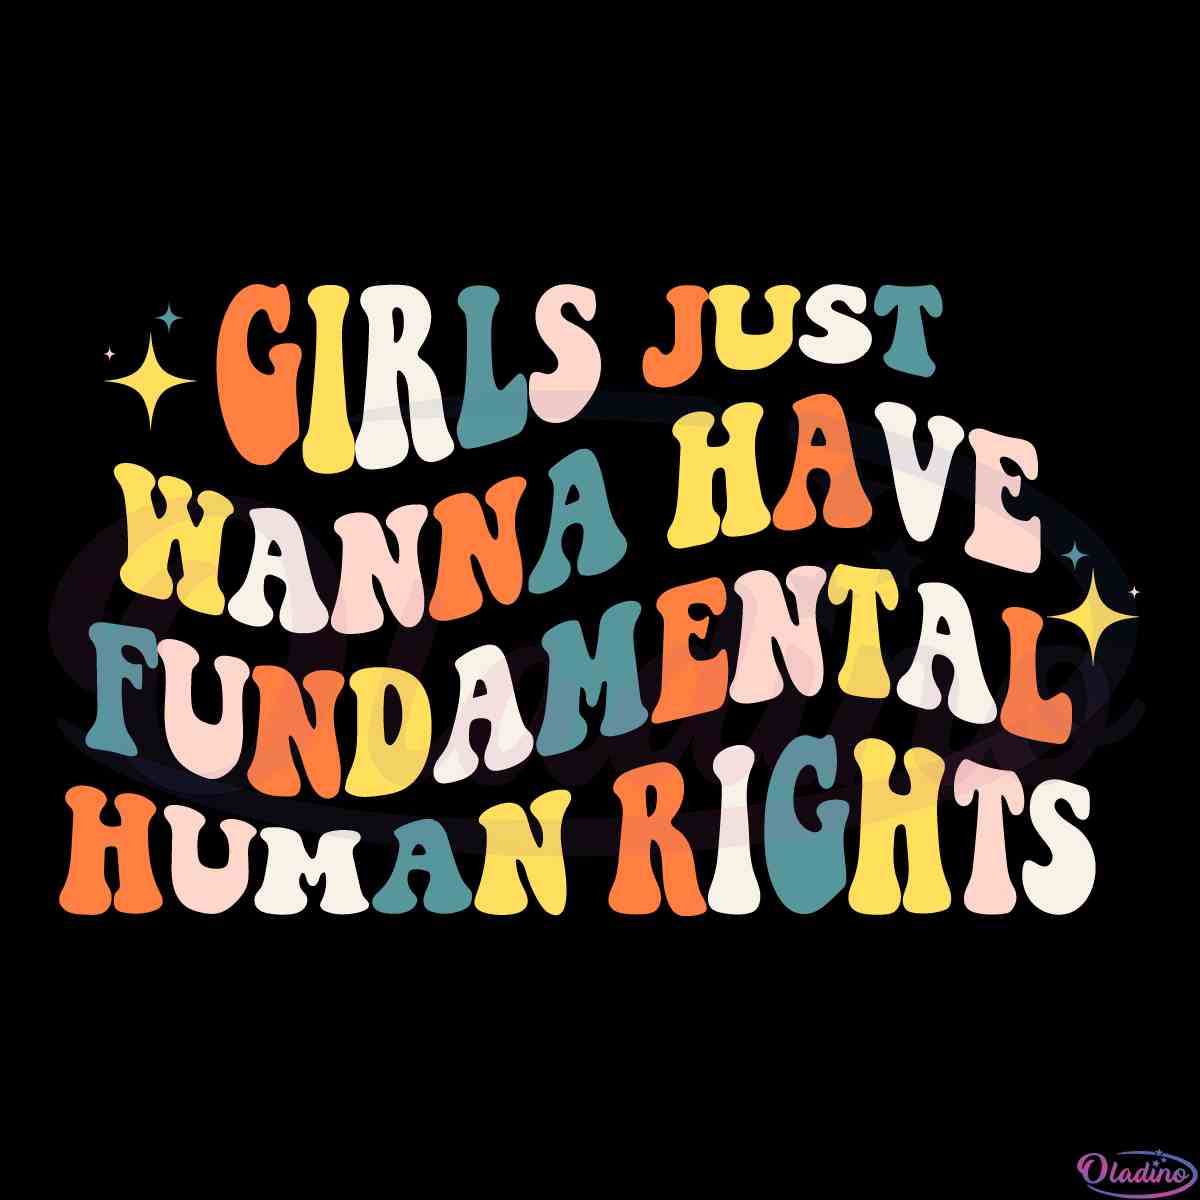 girls-just-wanna-have-fundamental-human-rights-cricut-svg-cutting-files